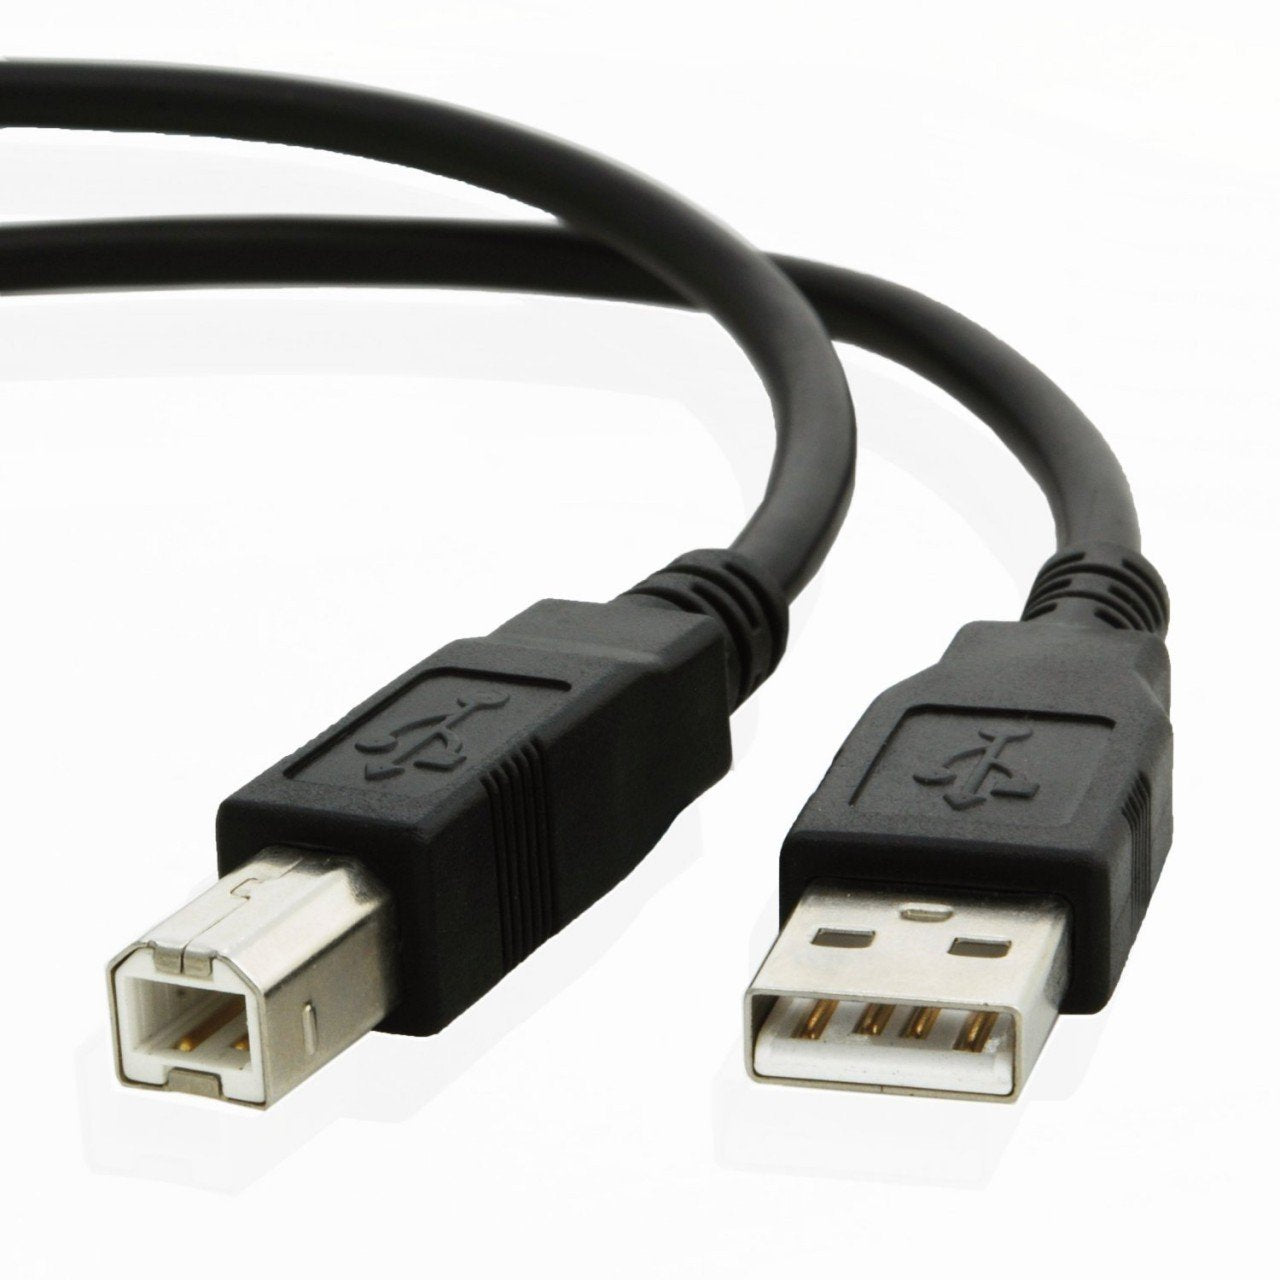 USB cable for Hp LASERJET ENTERPRISE M577f